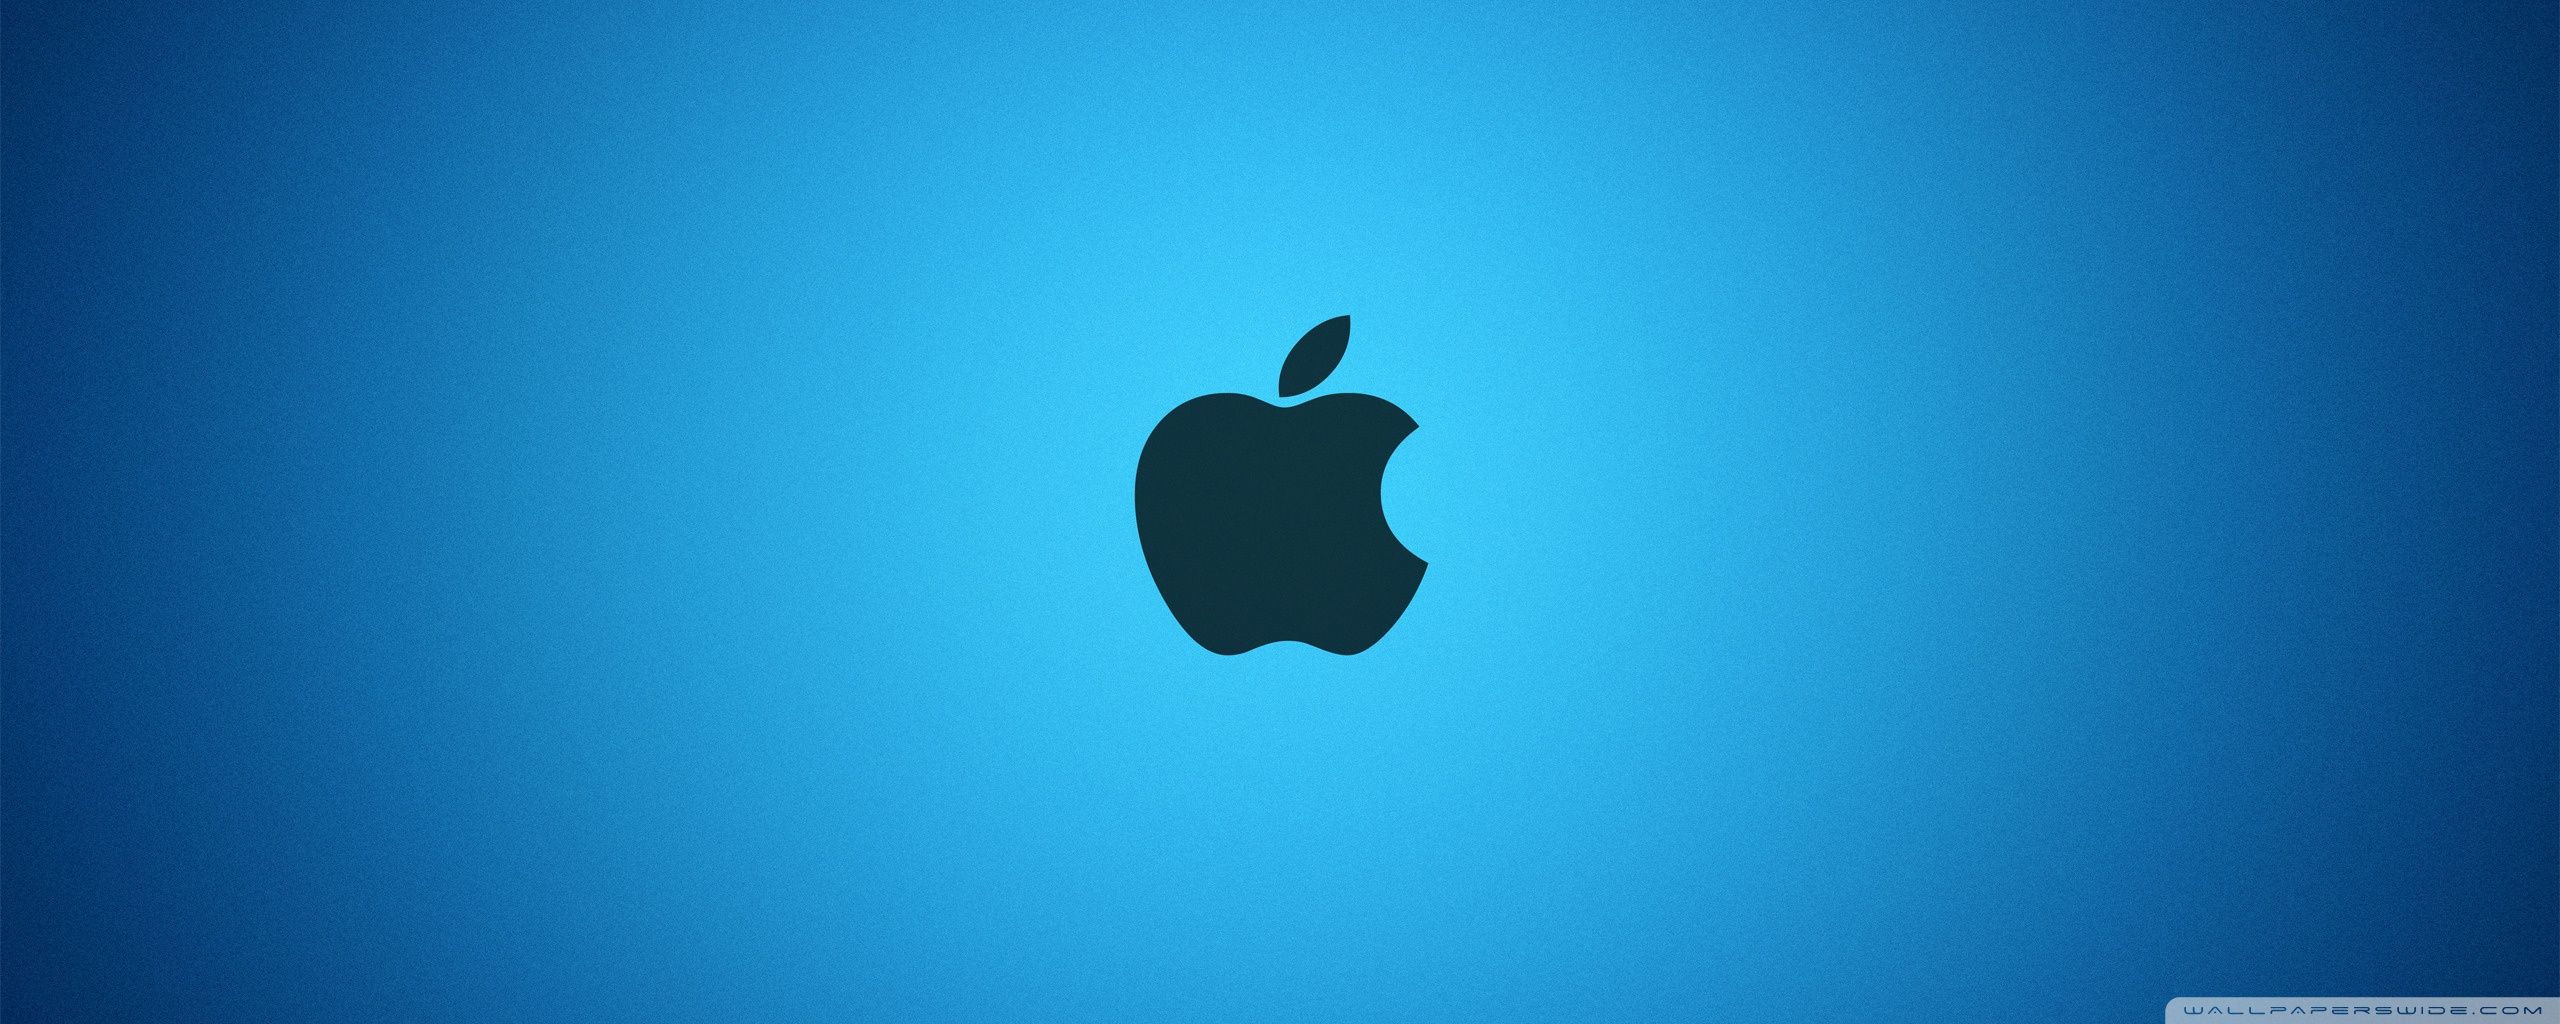 Blue Apple Logo wallpaperx1024